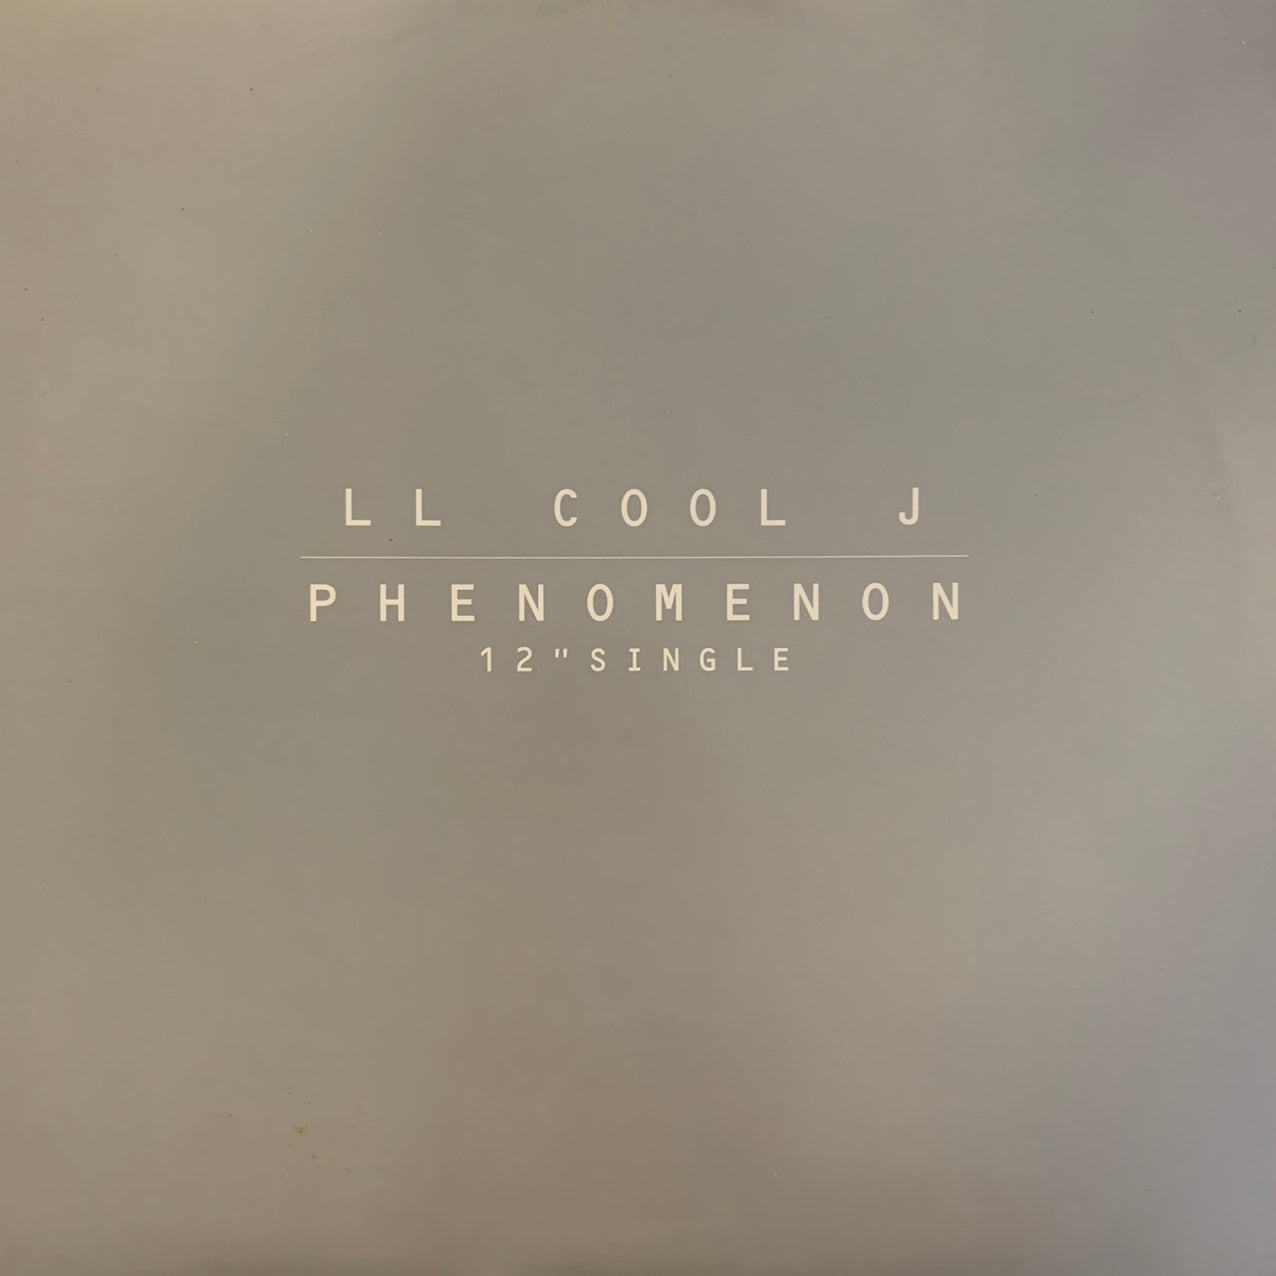 ll cool j radio album cover